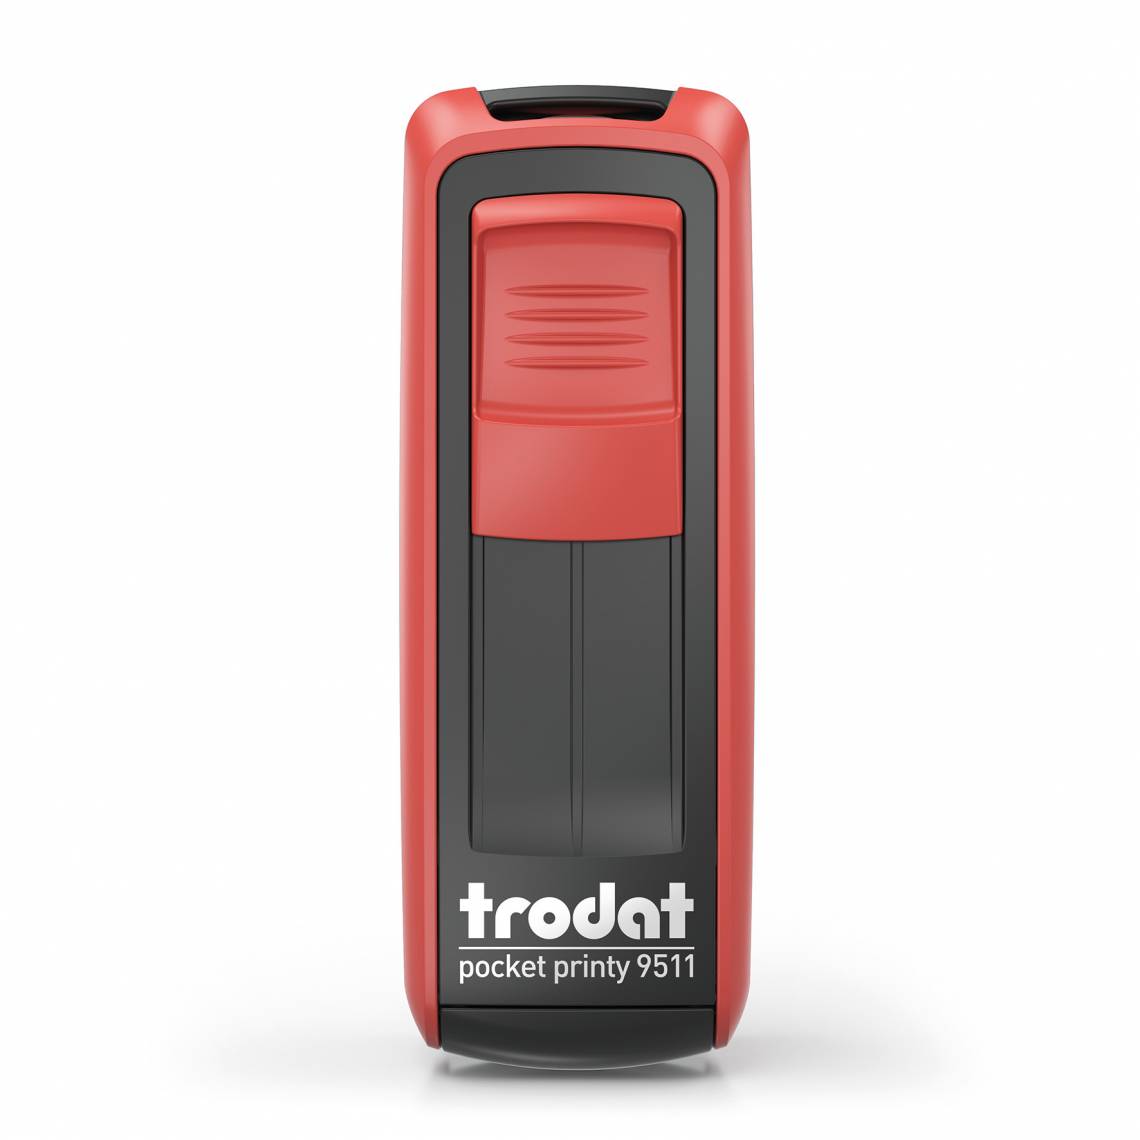 trodat - Kontaktdatenstempel PocketPrinty 9511 - Schwarz-rot - frei